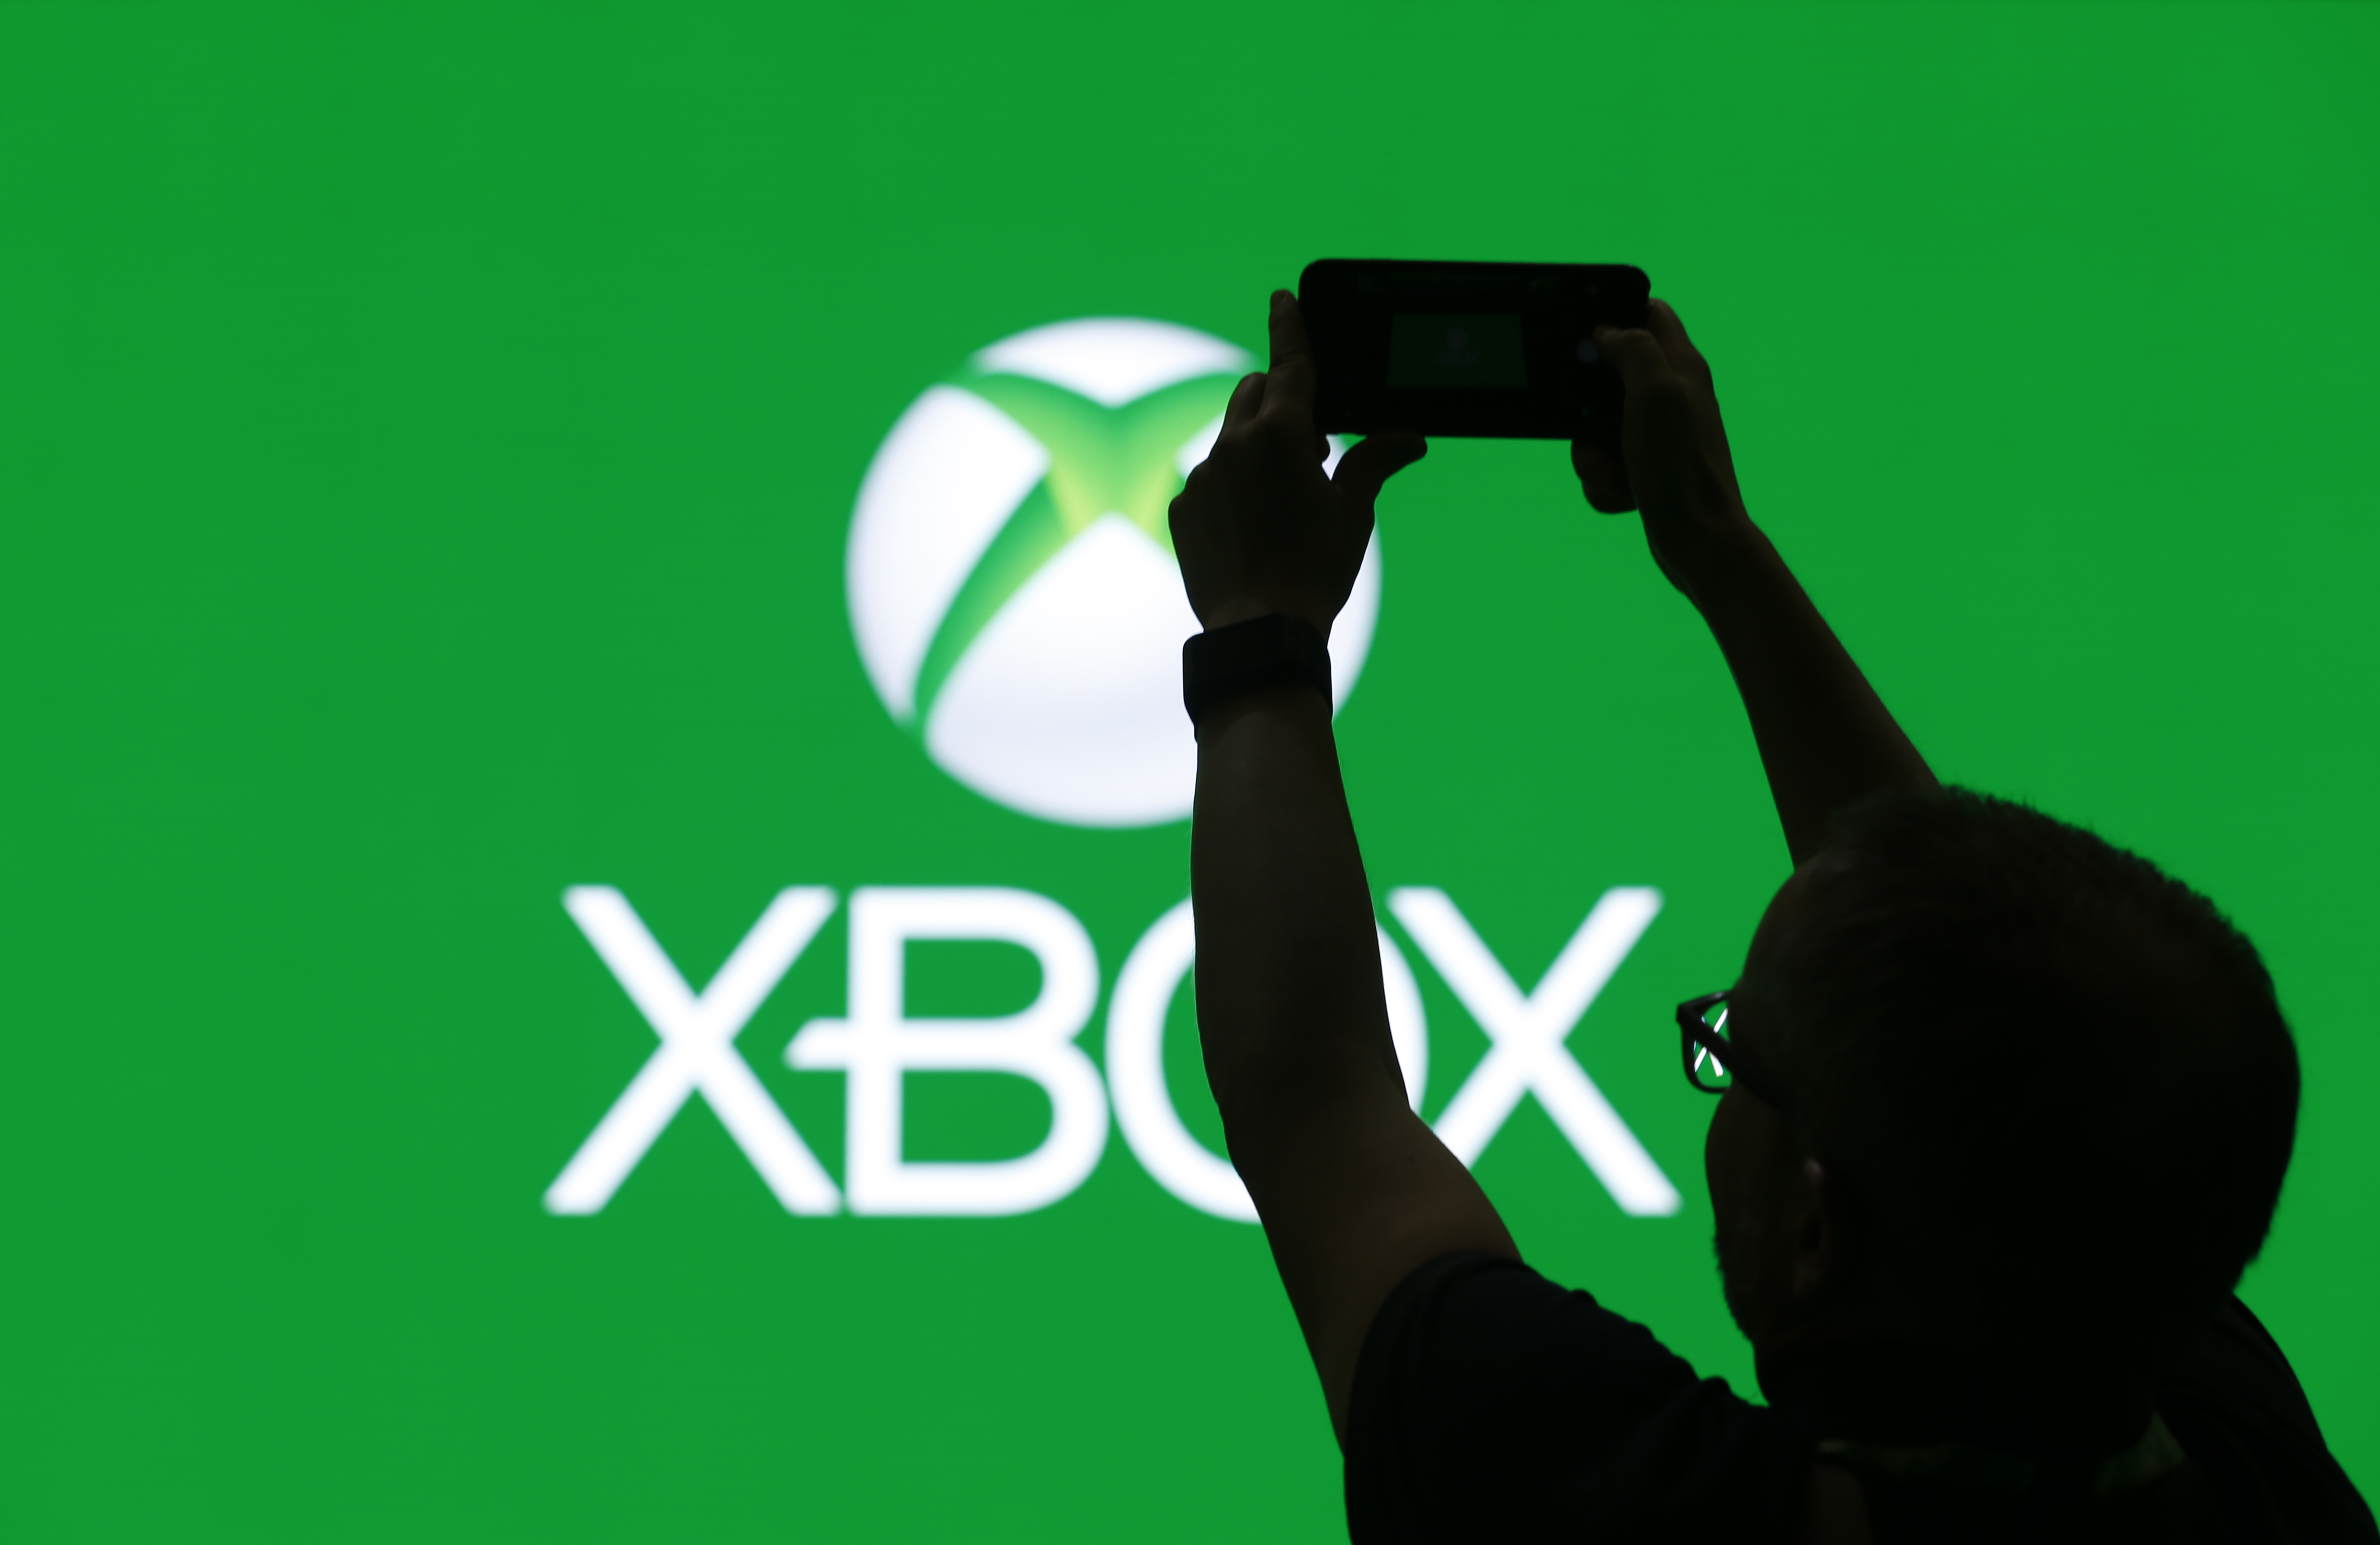 Xbox gamescom 2016 Showcase